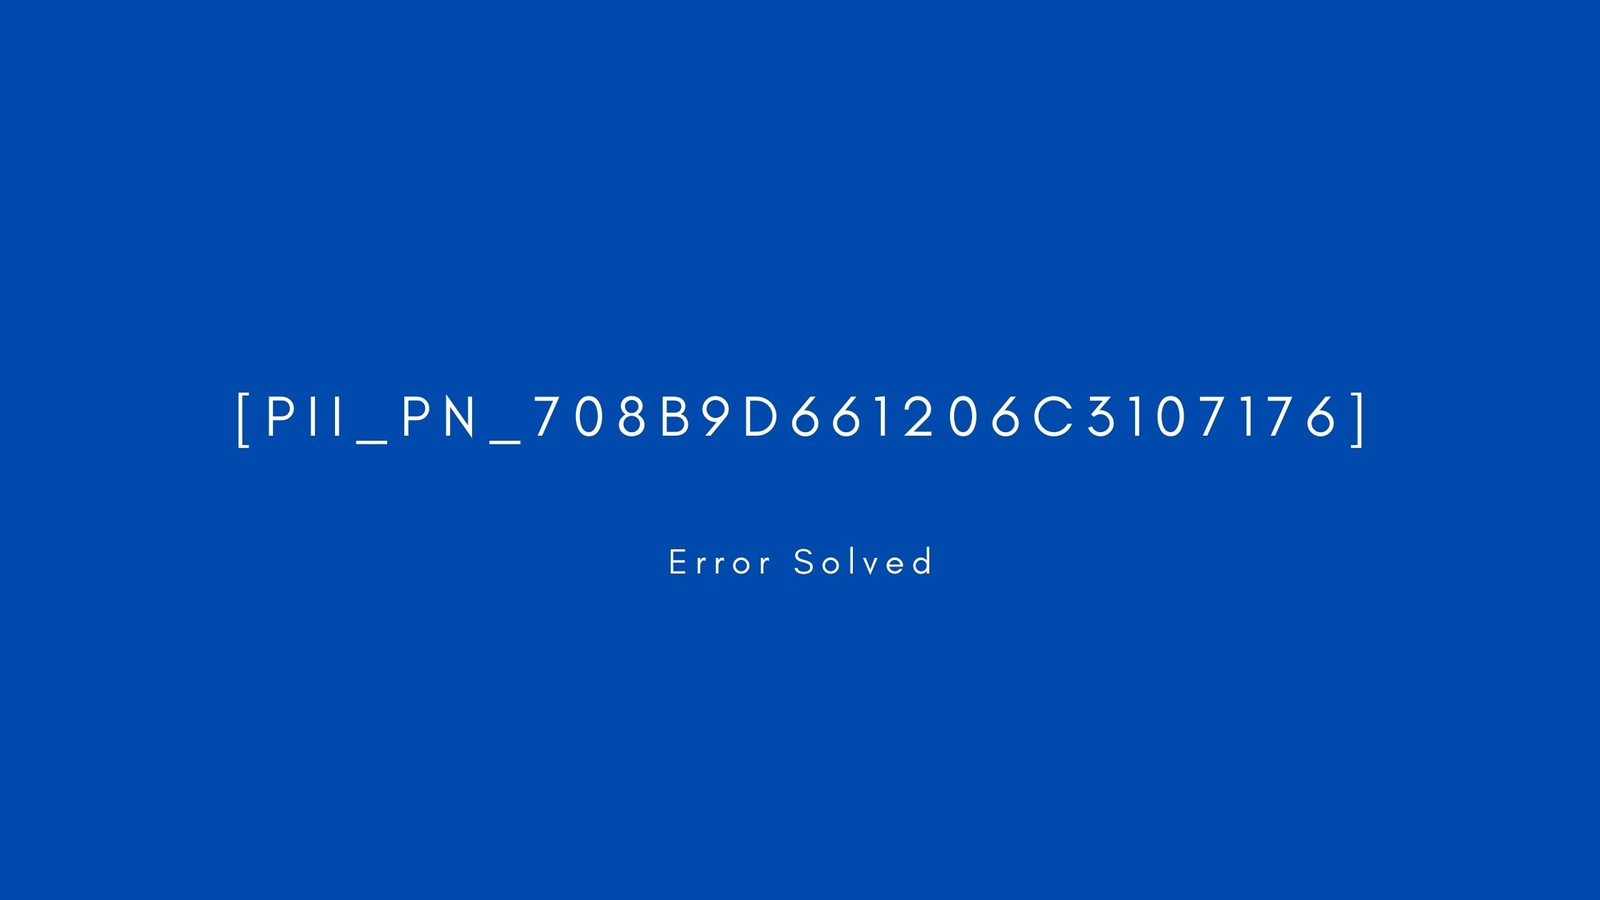 [pii_pn_708b9d661206c3107176] Error resolved